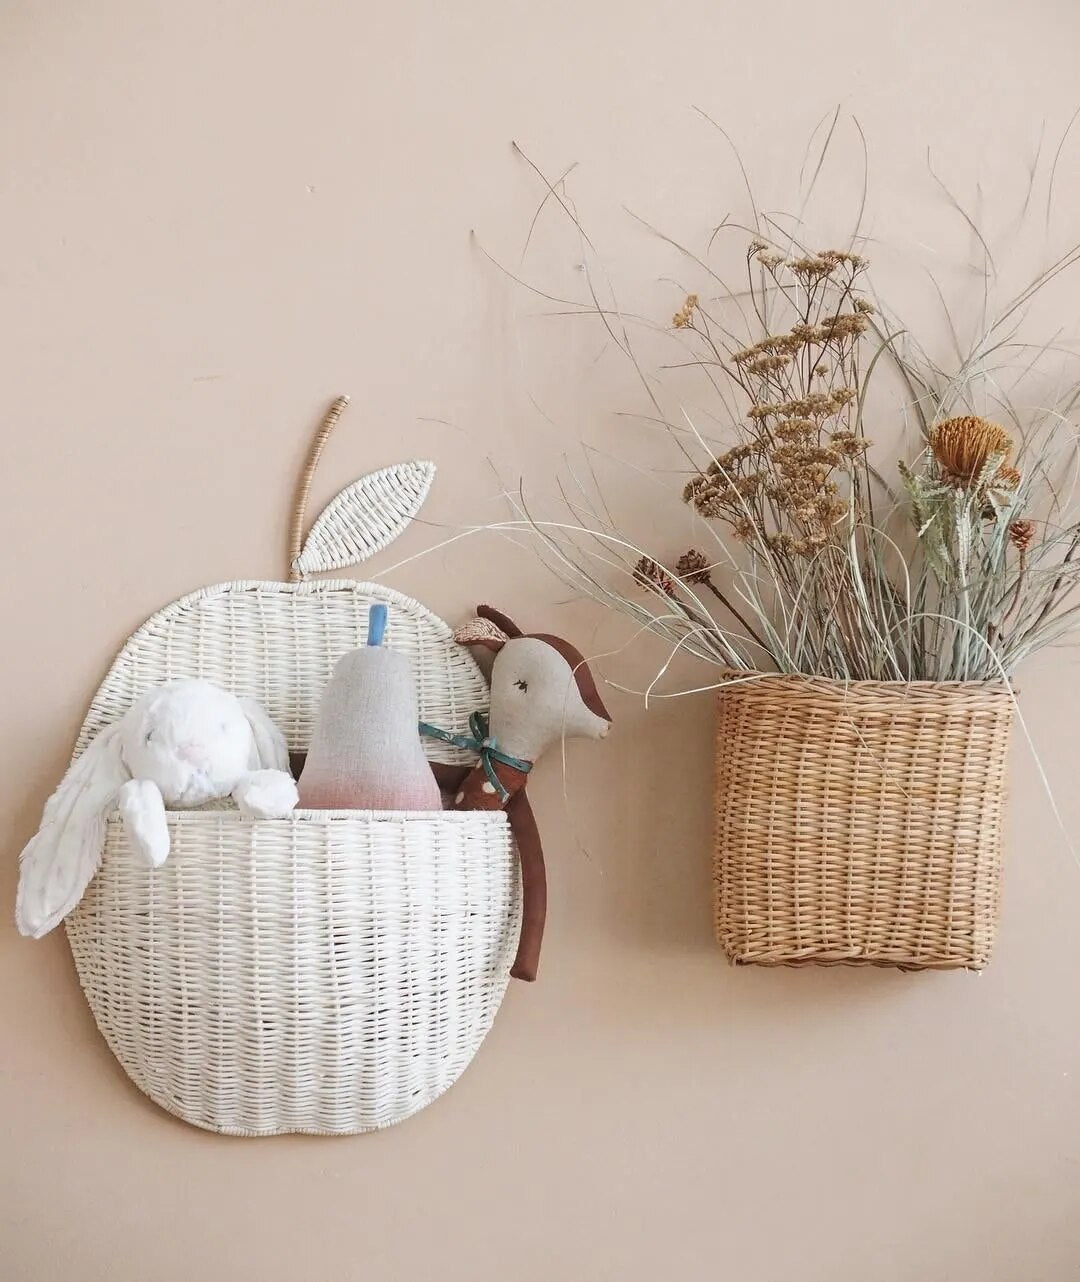 Decorative Woven Basket, Nursery Toy Storage Basket For Organizing